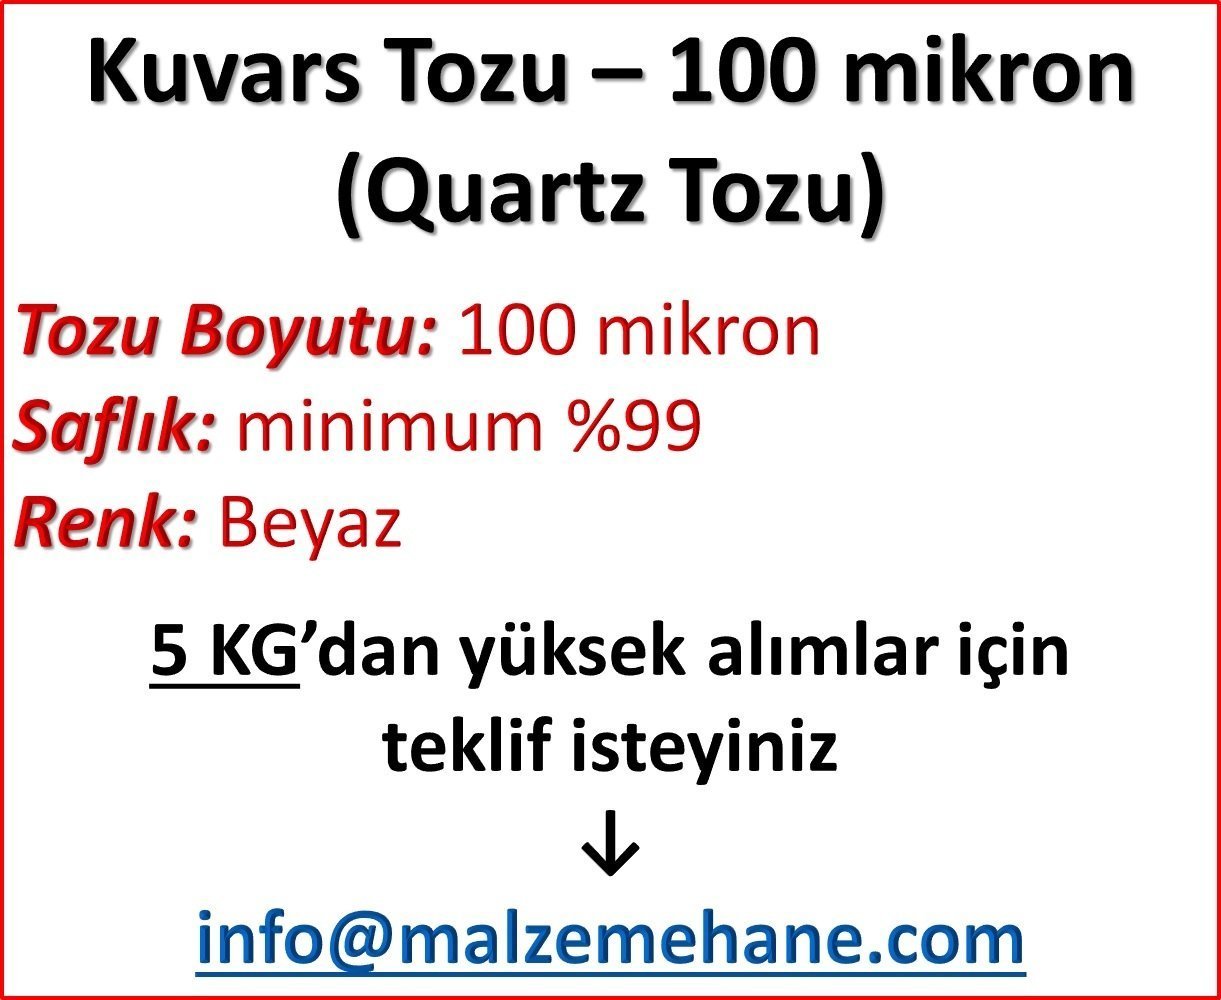 Kuvars Tozu (Ouartz Tozu) 100 mikron